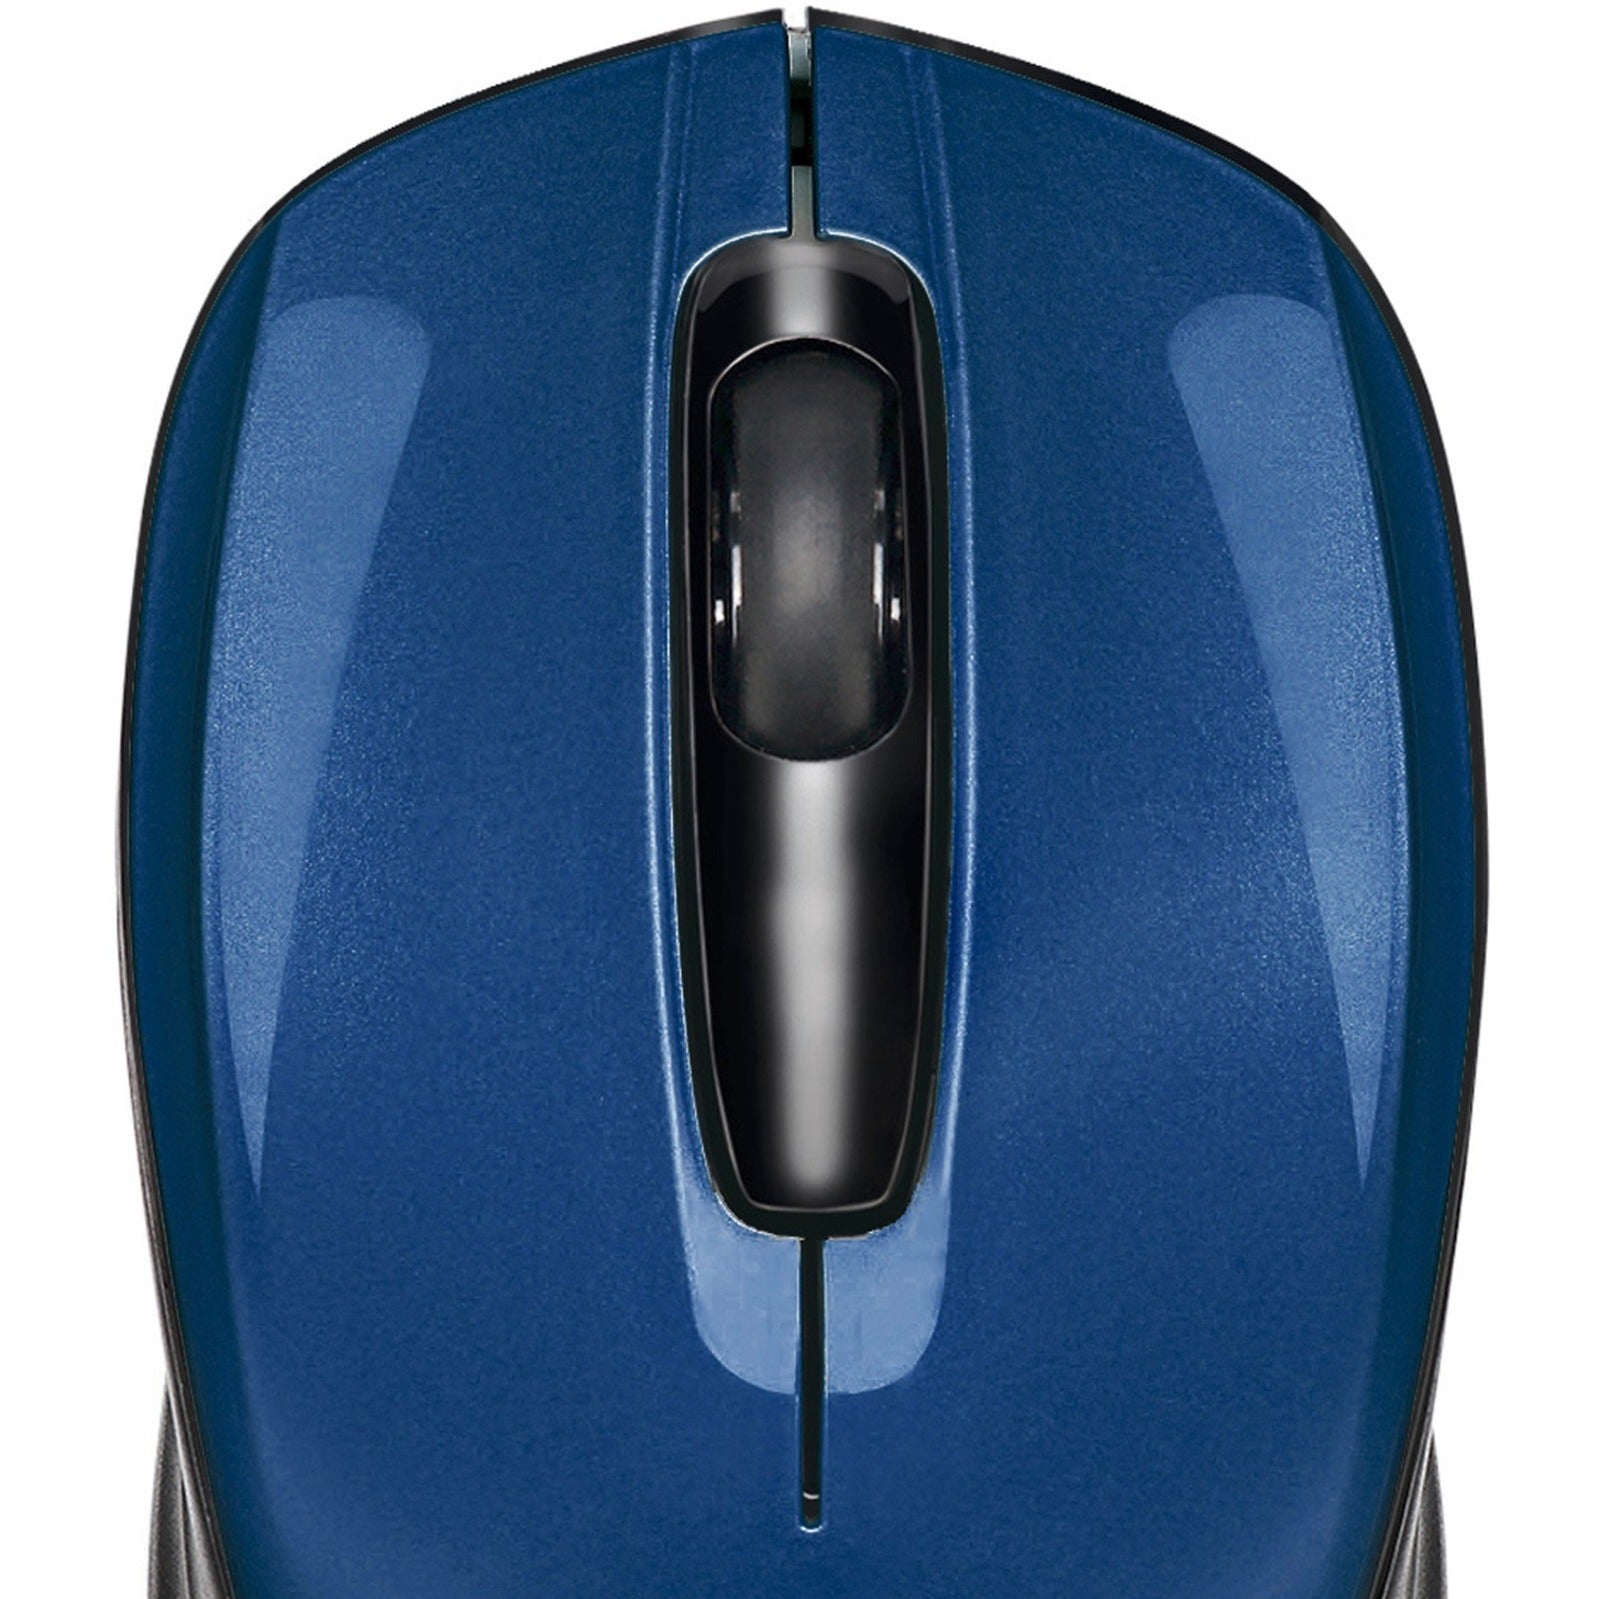 Adesso iMouse S50L 2.4GHz Wireless Mini Mouse, Ergonomic Fit, 1200 DPI, Blue